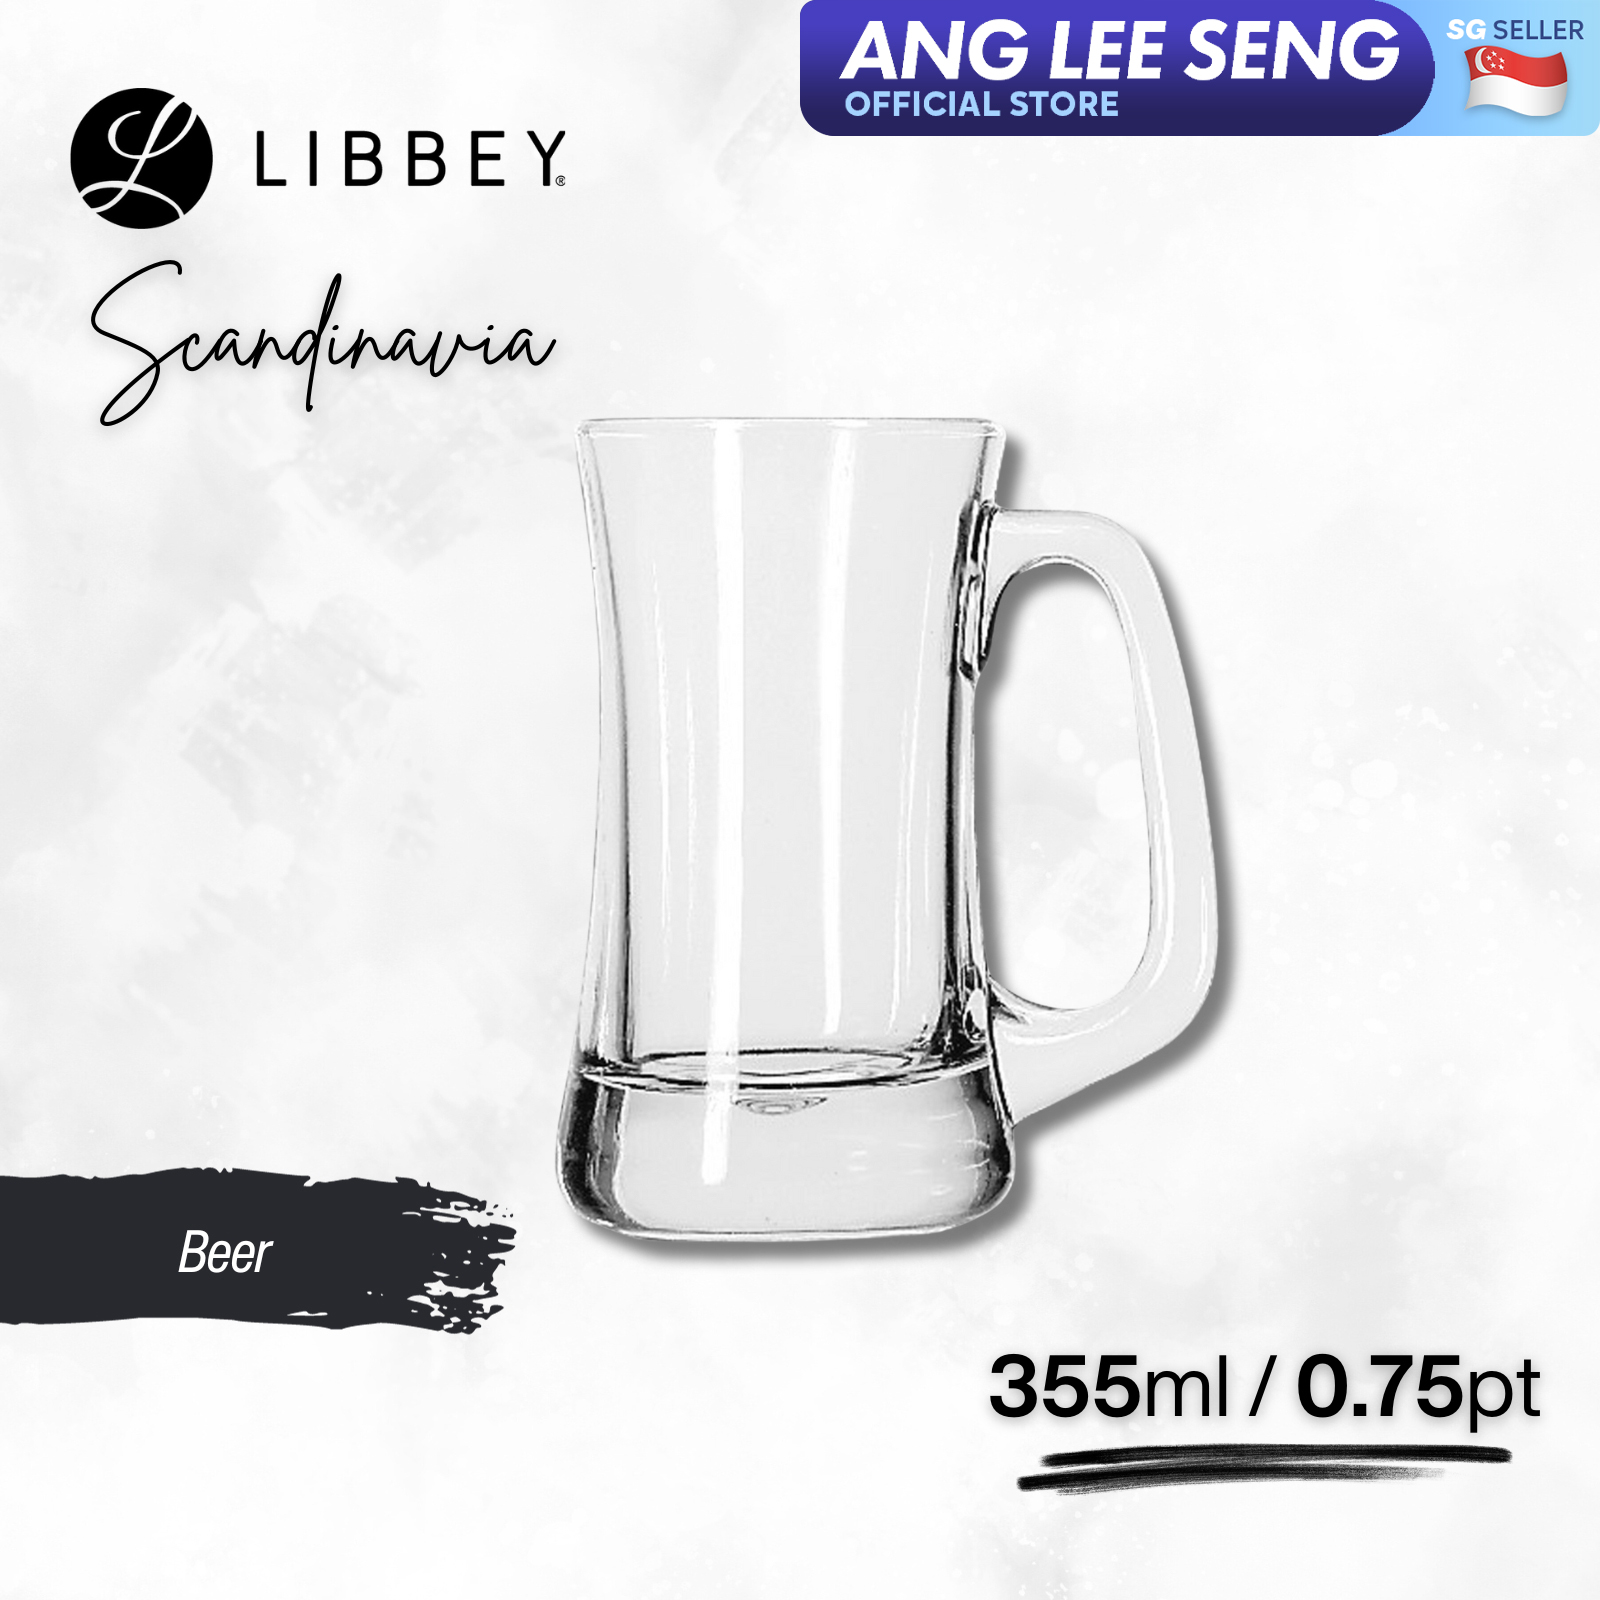 Libbey Scandinavia 5297 Glass Beer Mug 355ml/12oz